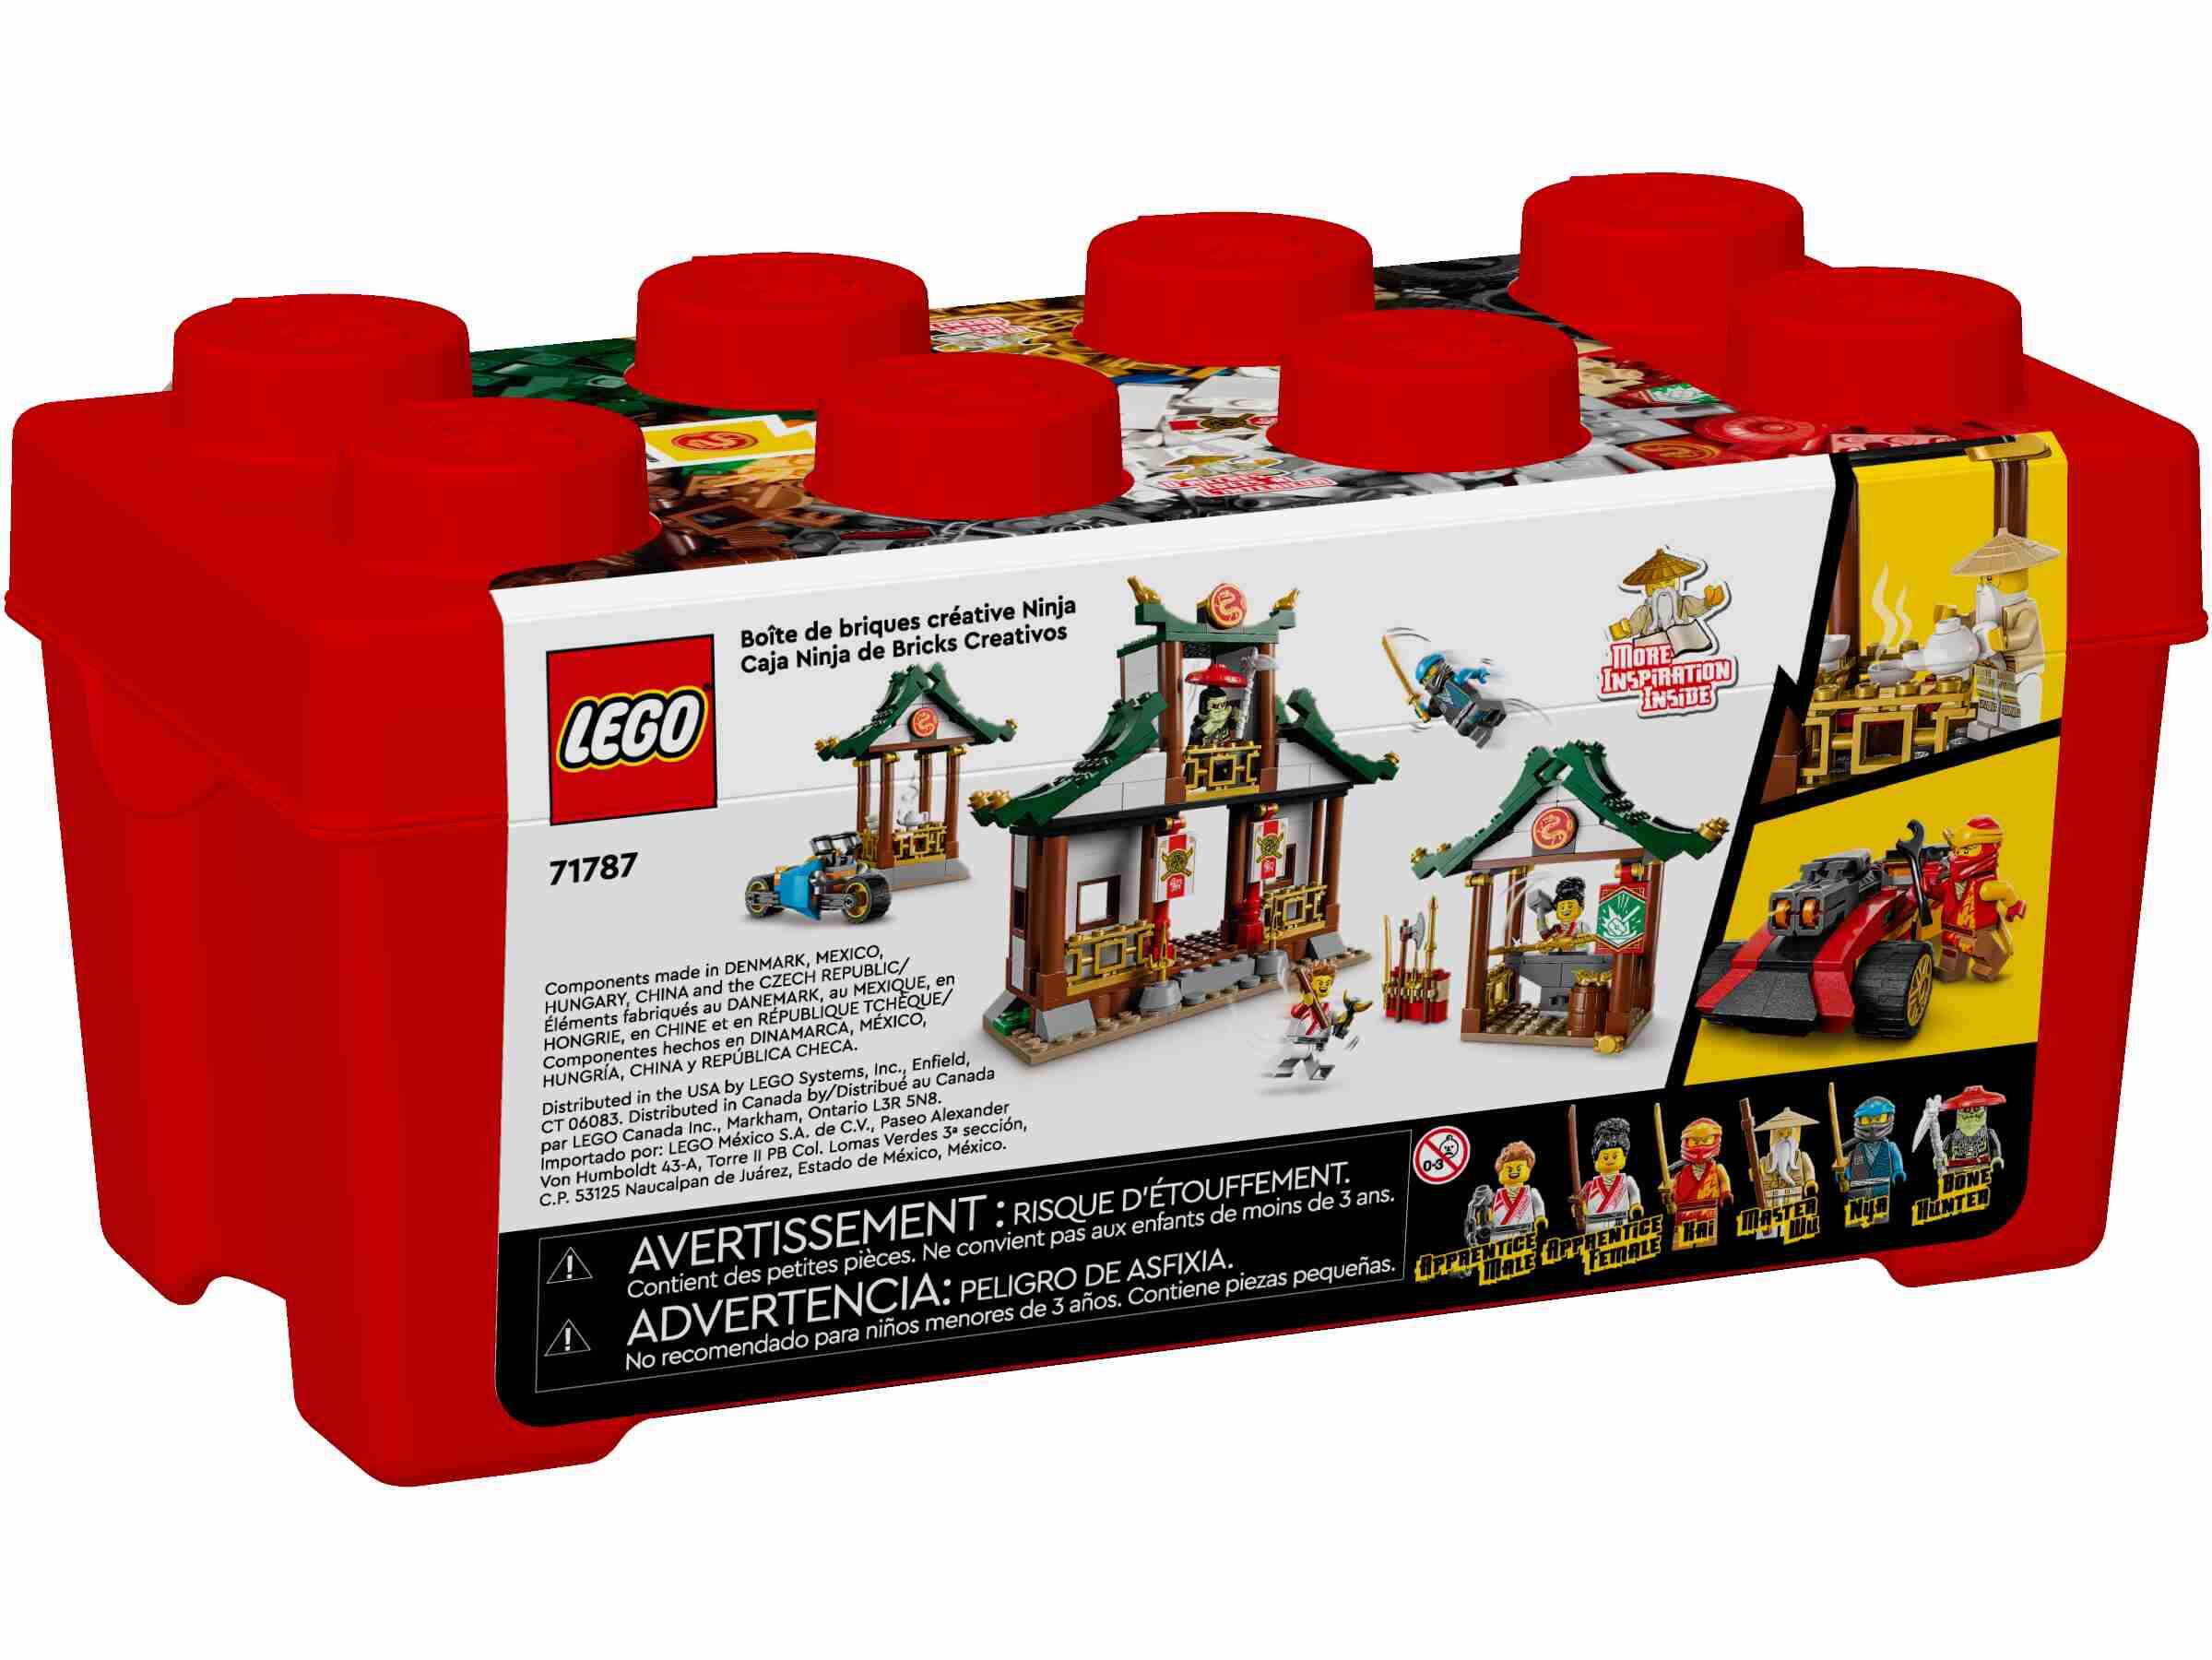 LEGO 71787 NINJAGO Kreative Ninja Steinebox, 6 Minifiguren jede Menge Ausrüstung